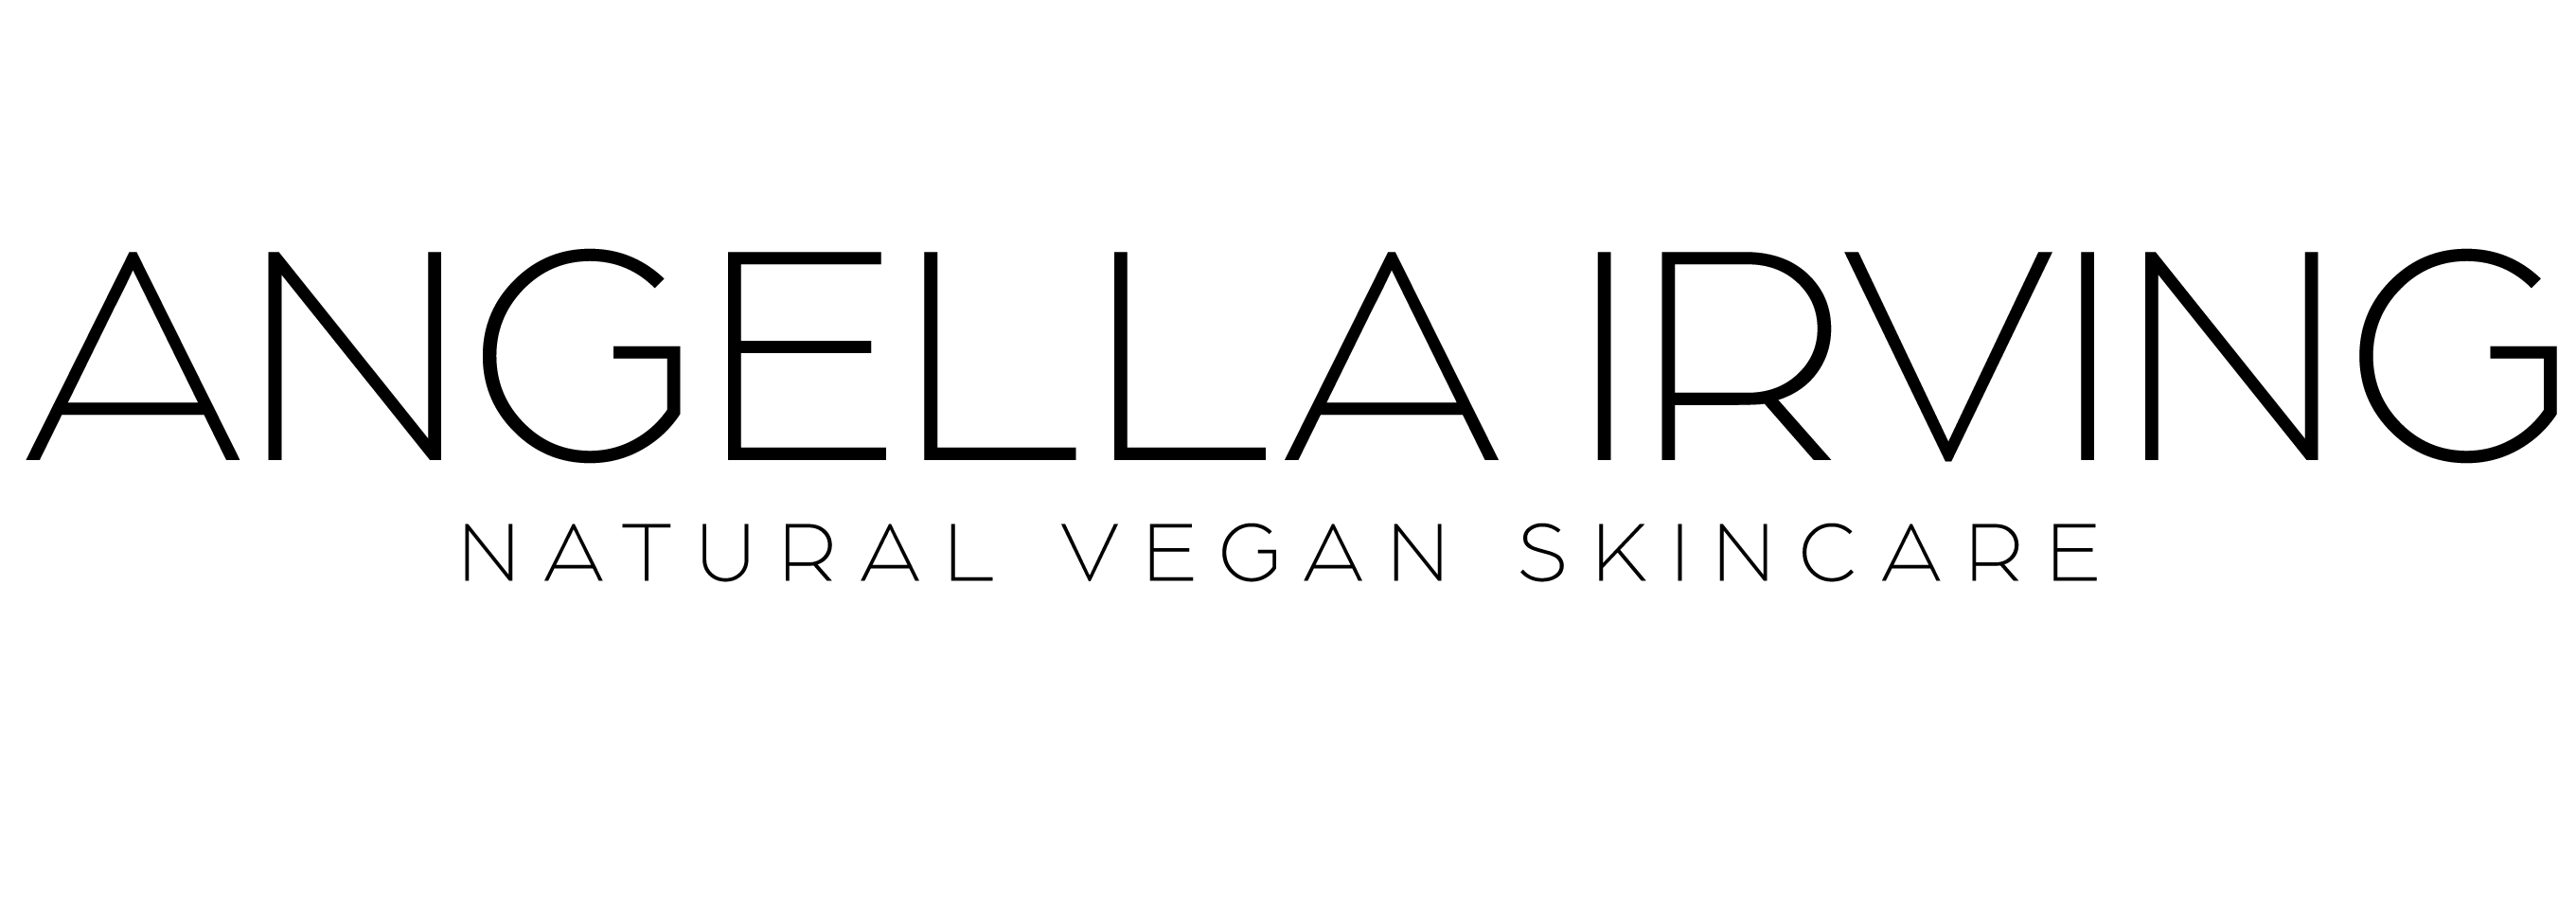 Natural Vegan Skincare Company – Angella Irving